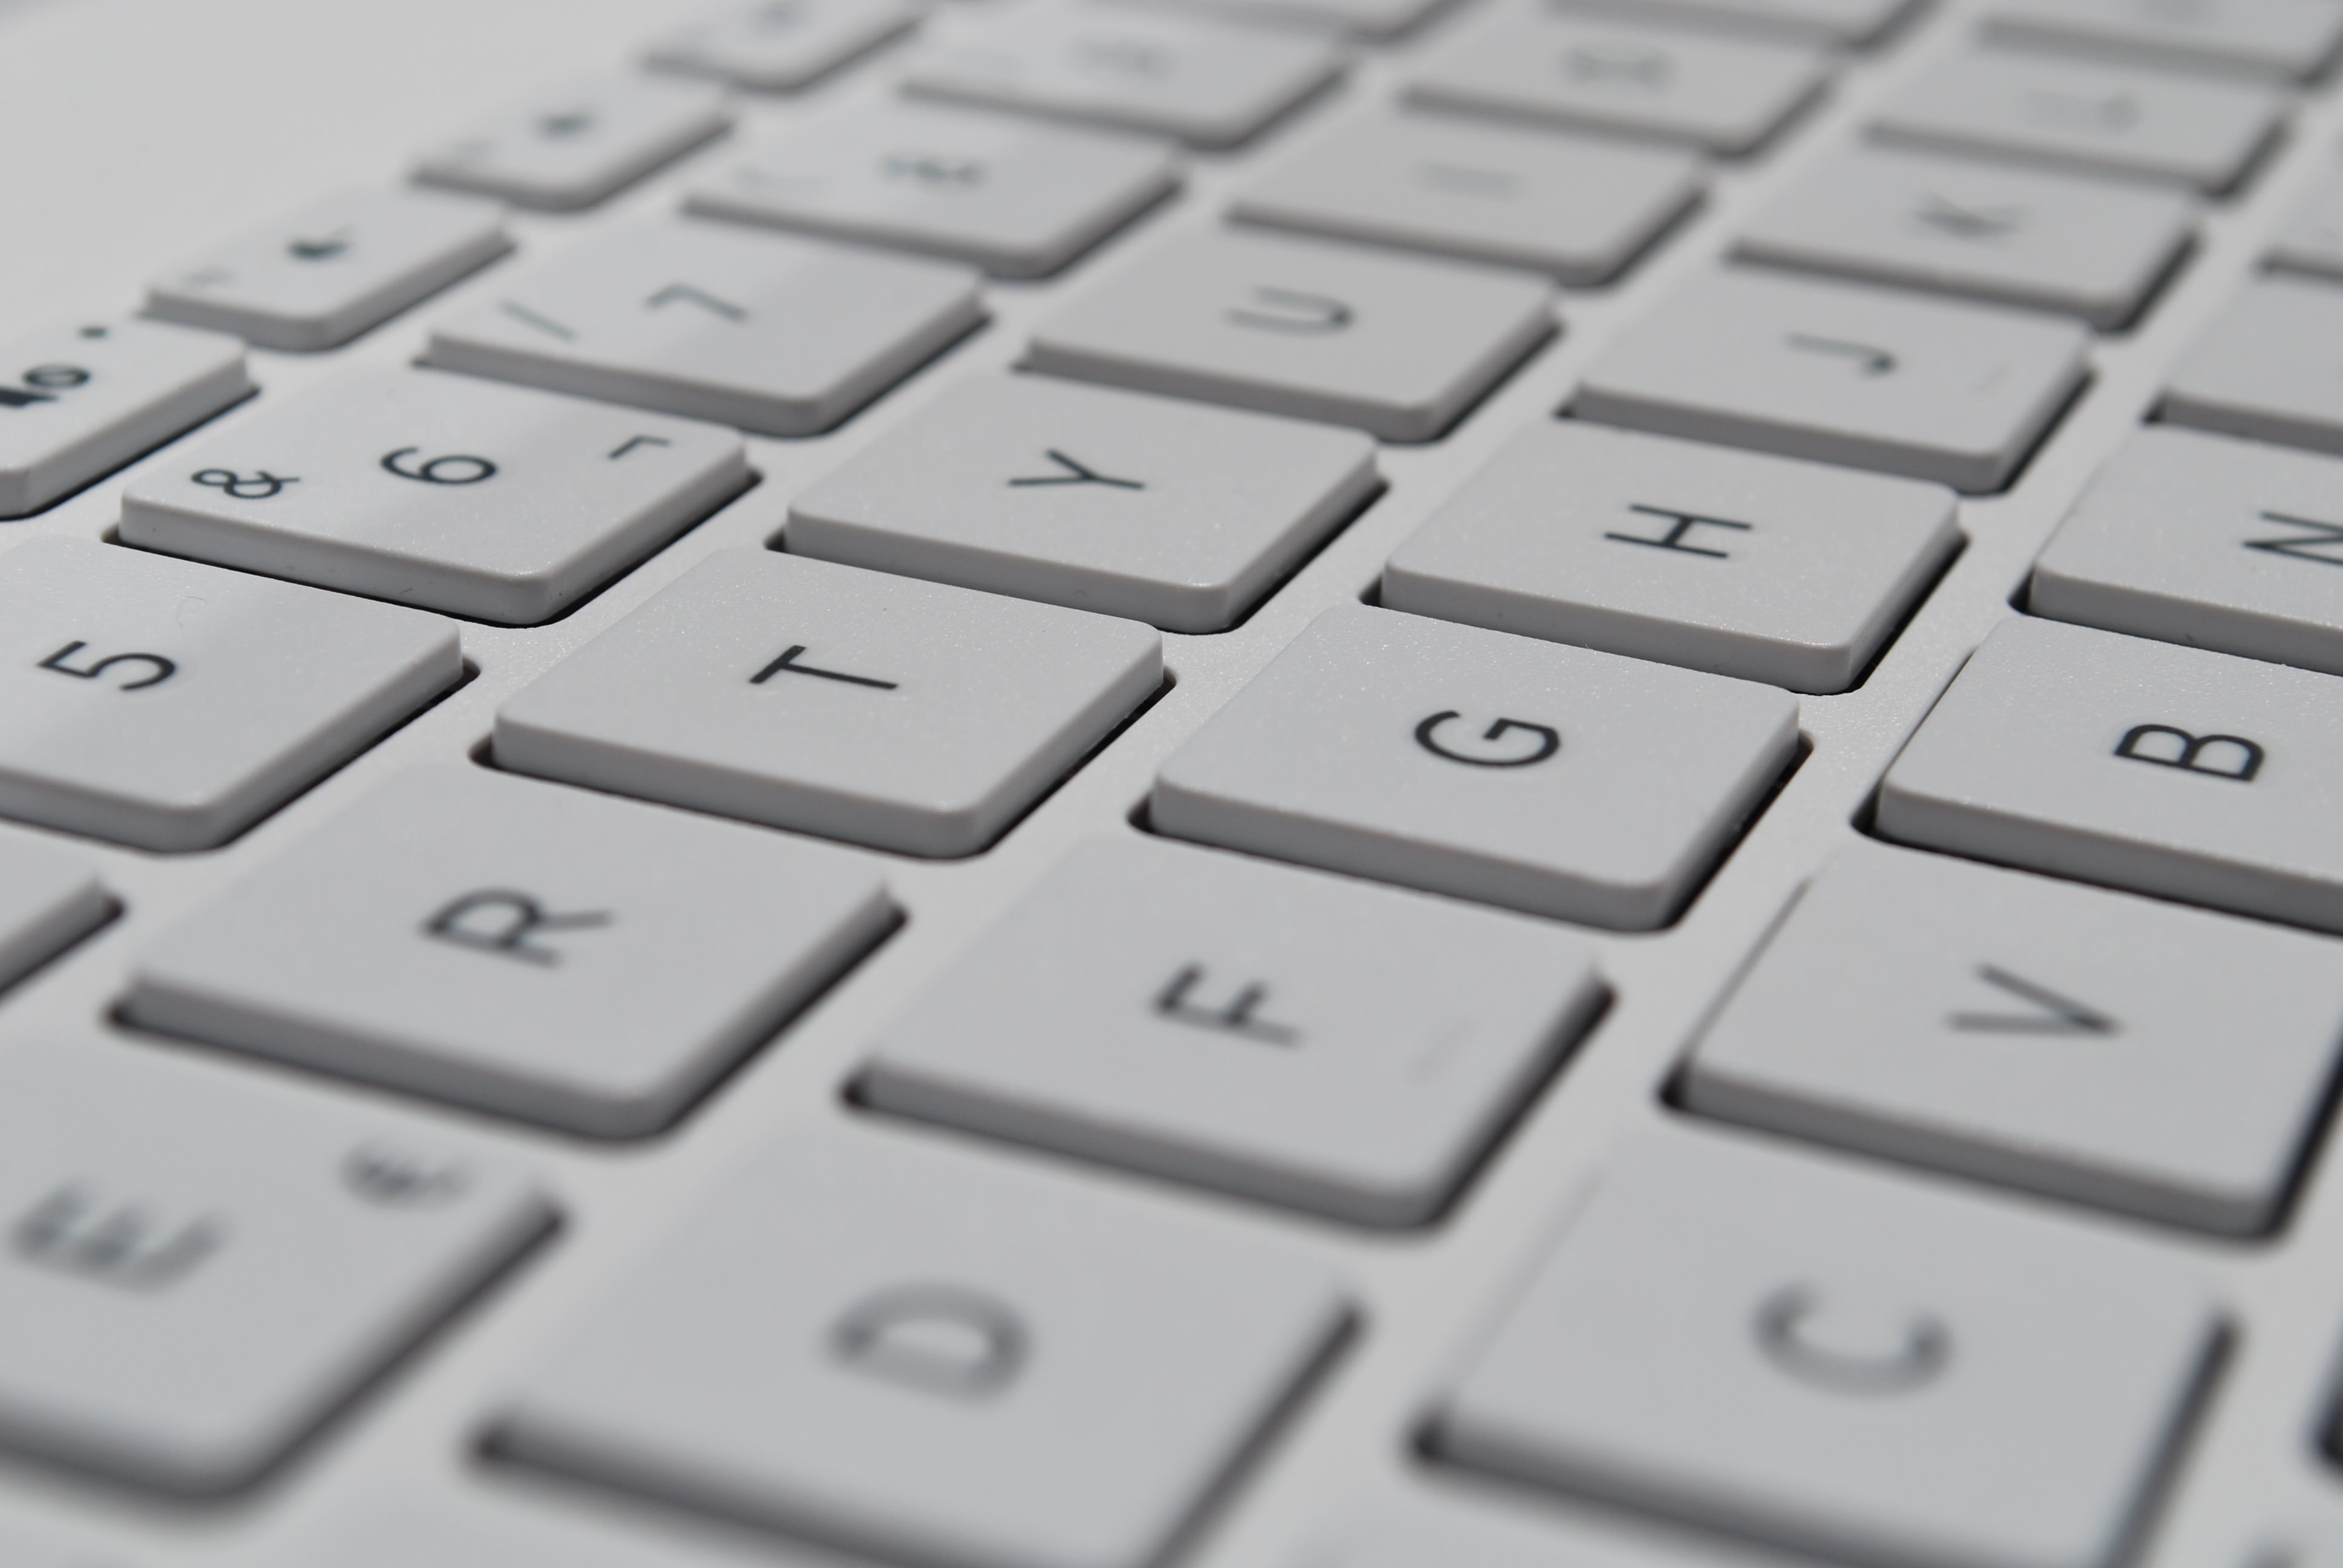 Apple Magic keyboard. Photo by Sergi Kabrera on Unsplash